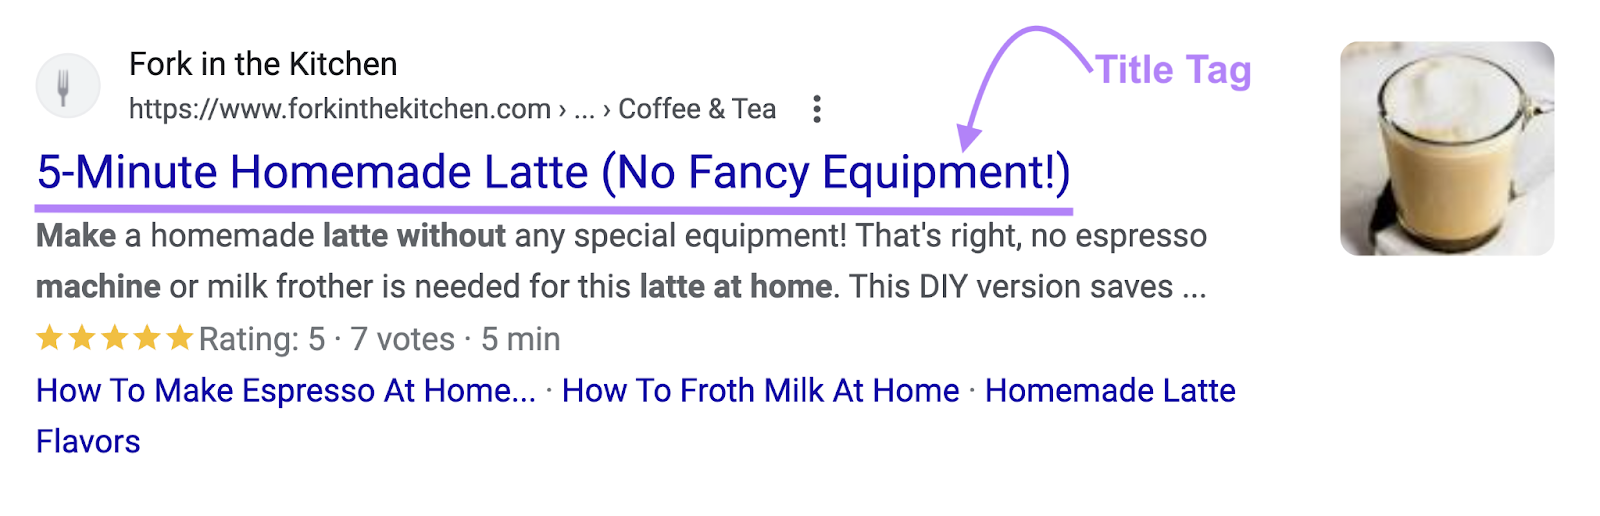  "5-Minute Homemade Latte (No Fancy Equipment)"